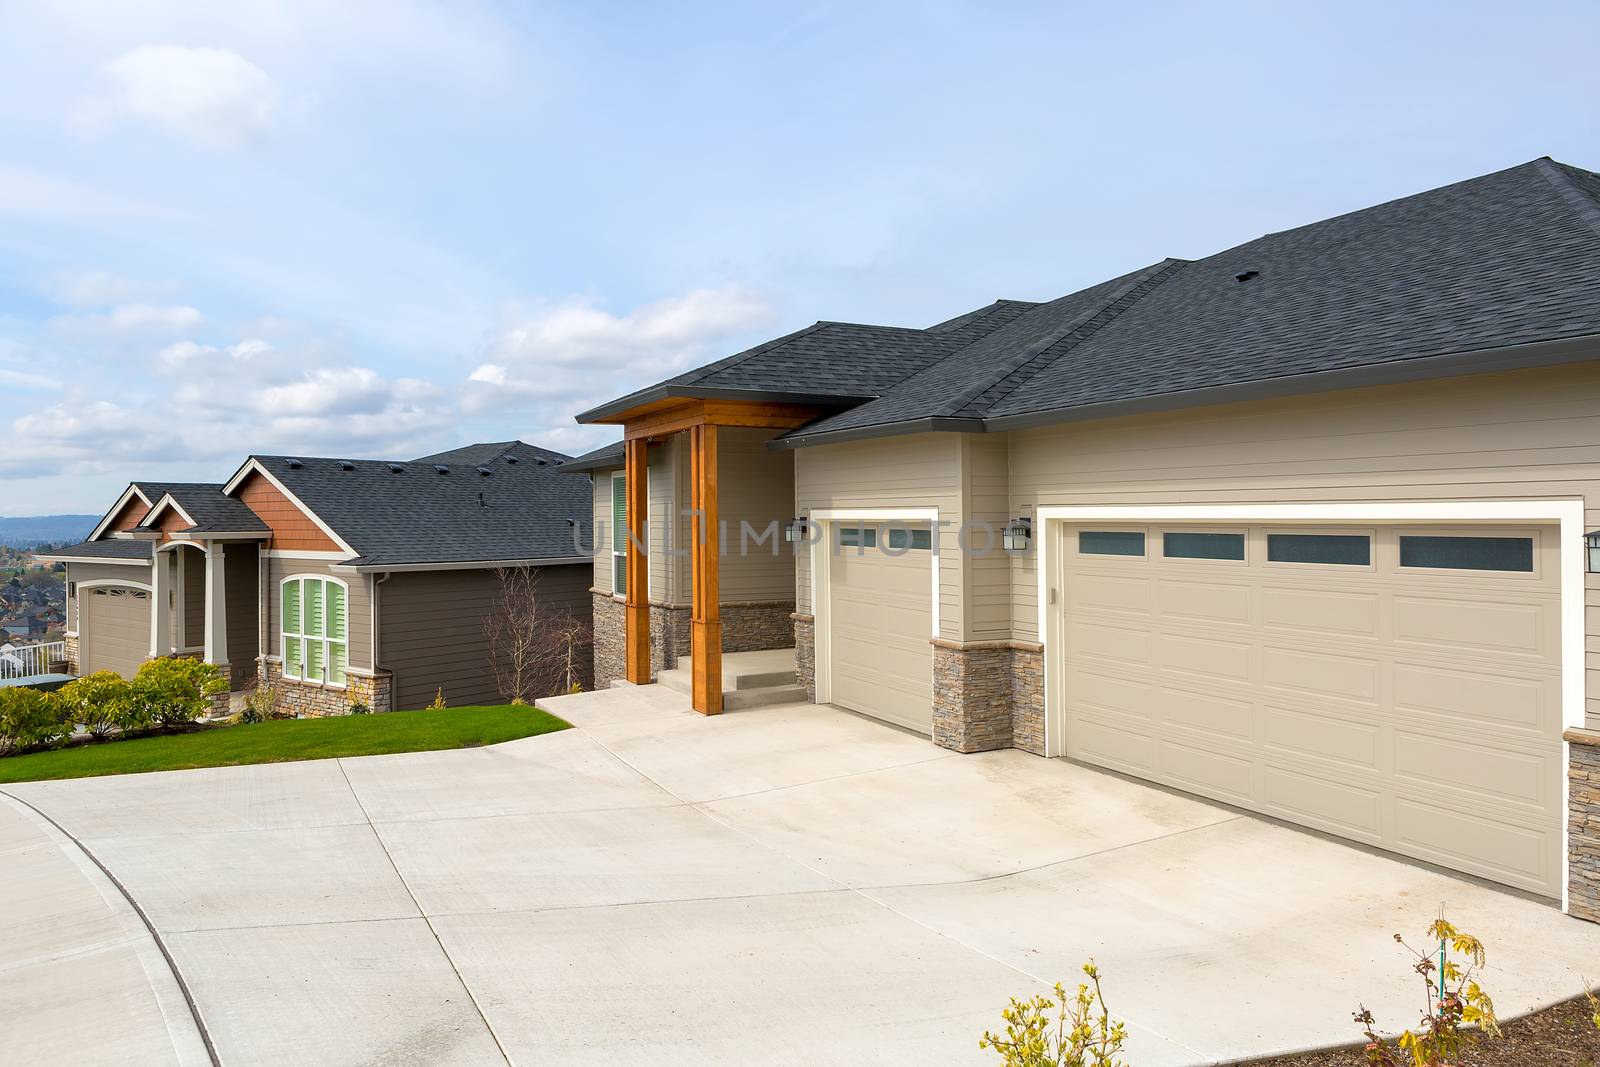 New Custom Built Homes in Suburban Neighborhood by jpldesigns